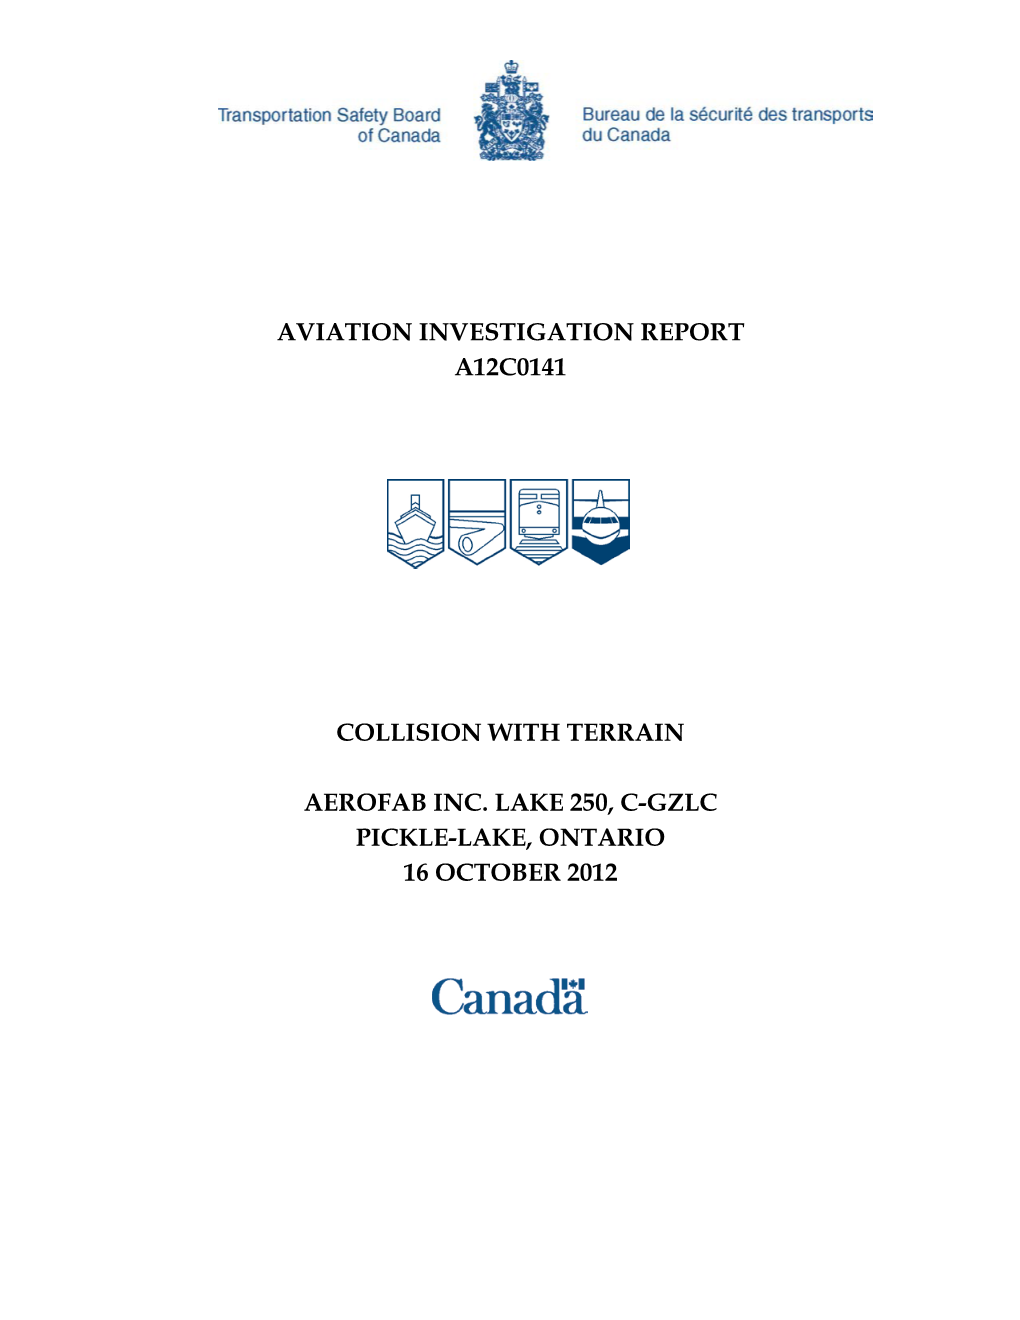 Aviation Investigation Report A12c0141